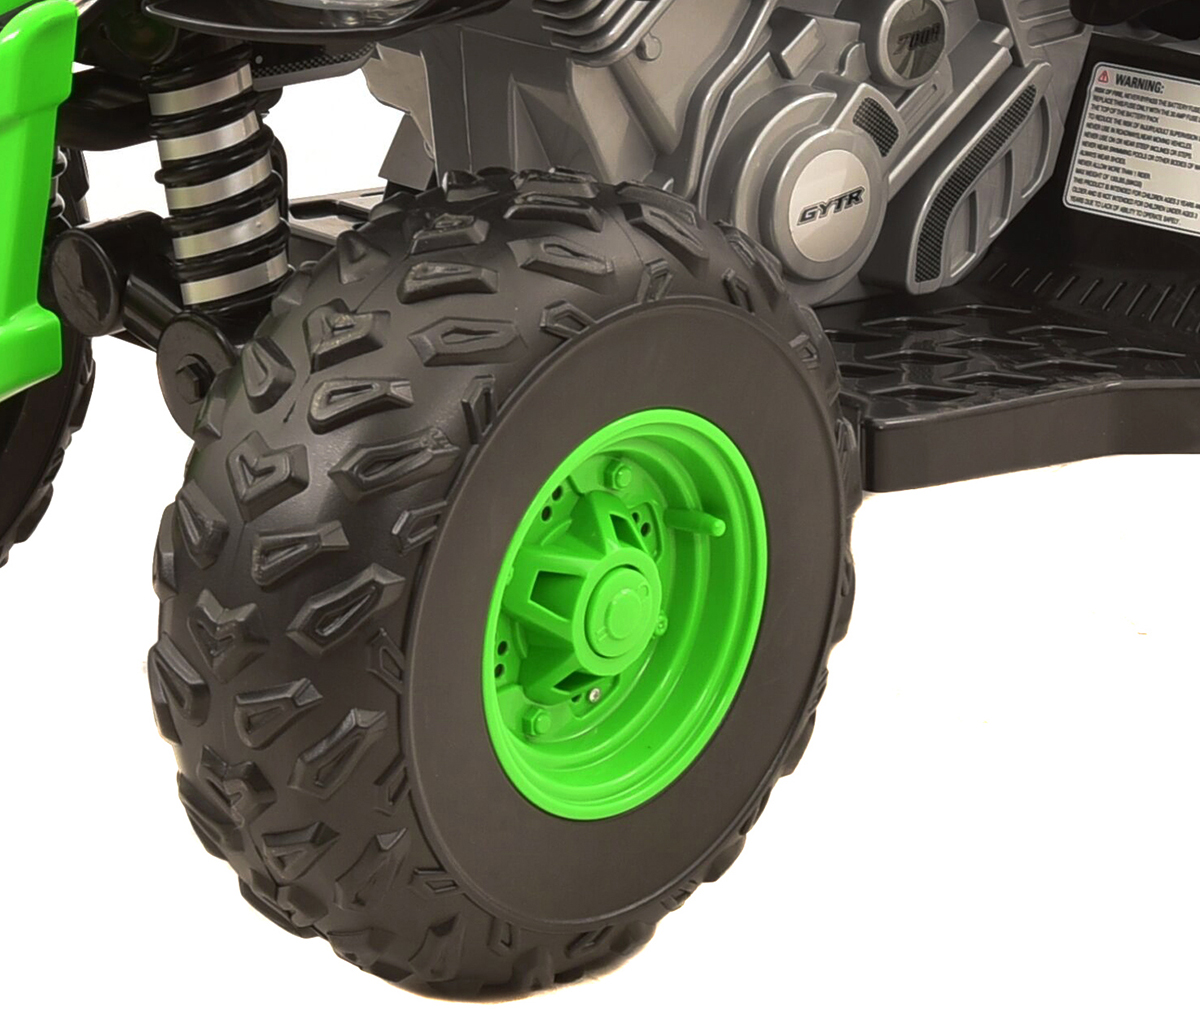 Yamaha 12V Raptor ATV Powered Ride-on, New Custom Graphic Design, for Boys & Girls, Ages 3+ - image 3 of 9